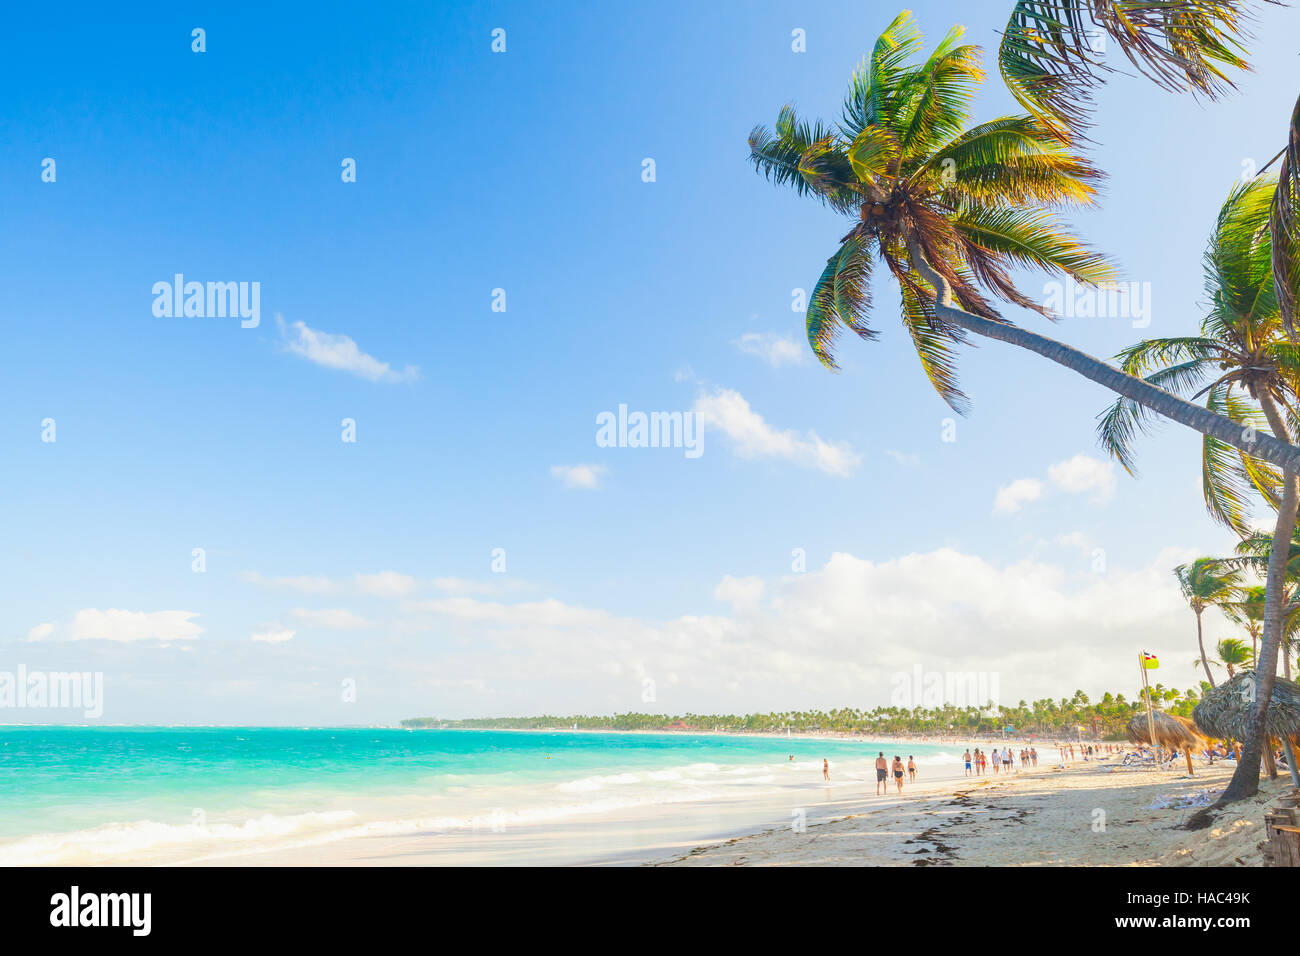 Palm trees on a sandy beach. Coast of Atlantic ocean, Dominican Republic, Punta Cana Stock Photo